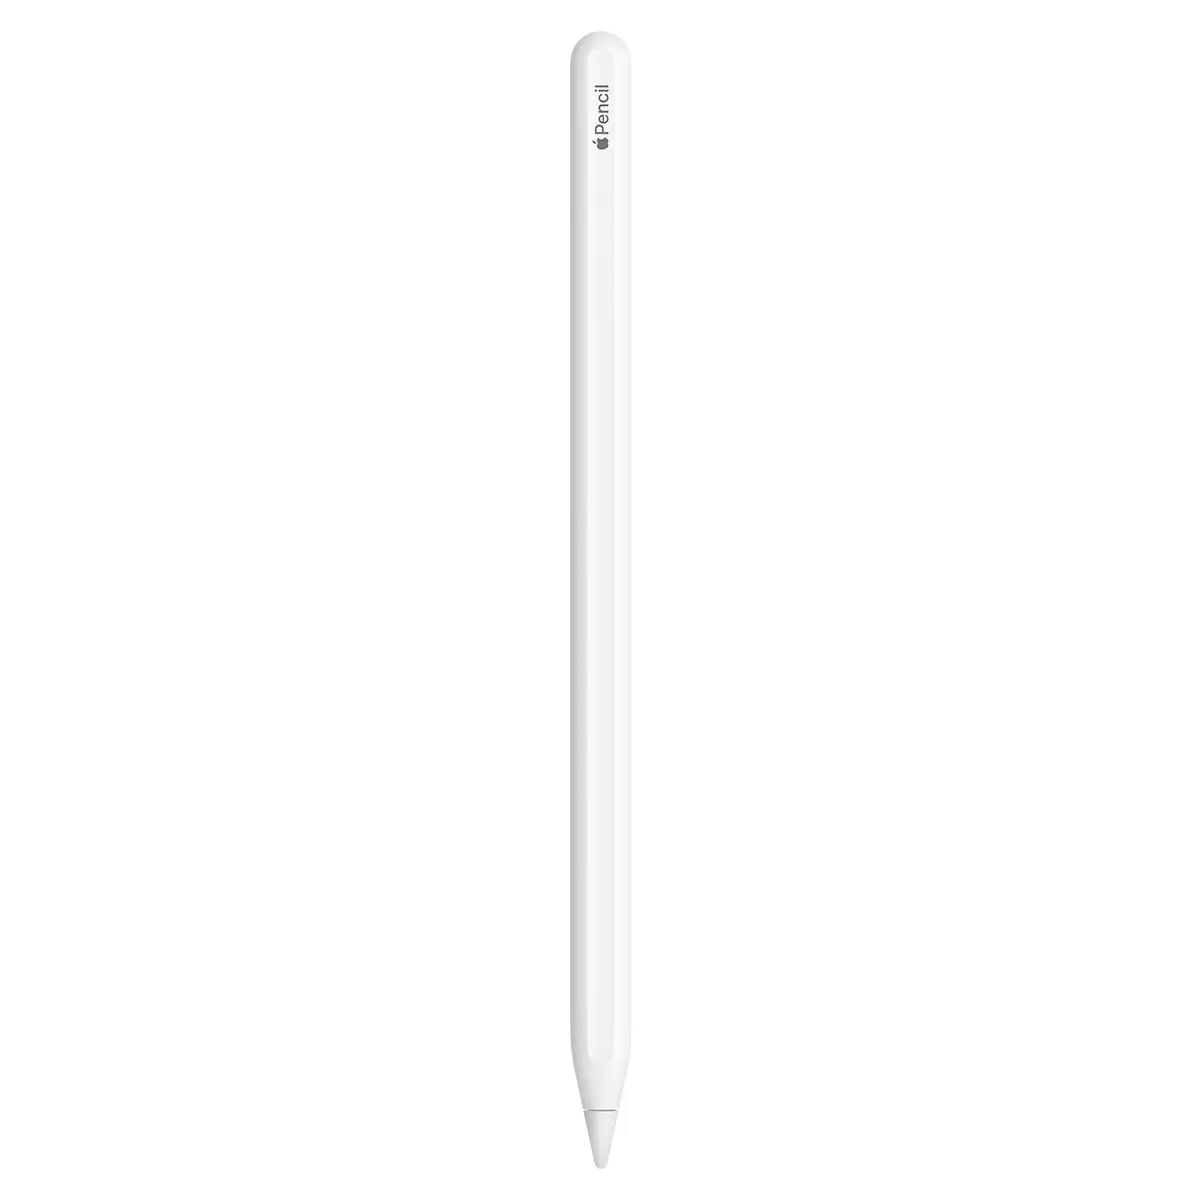 Buy Apple Pencil (2nd Generation), MU8F2ZM/A at costco.co.uk